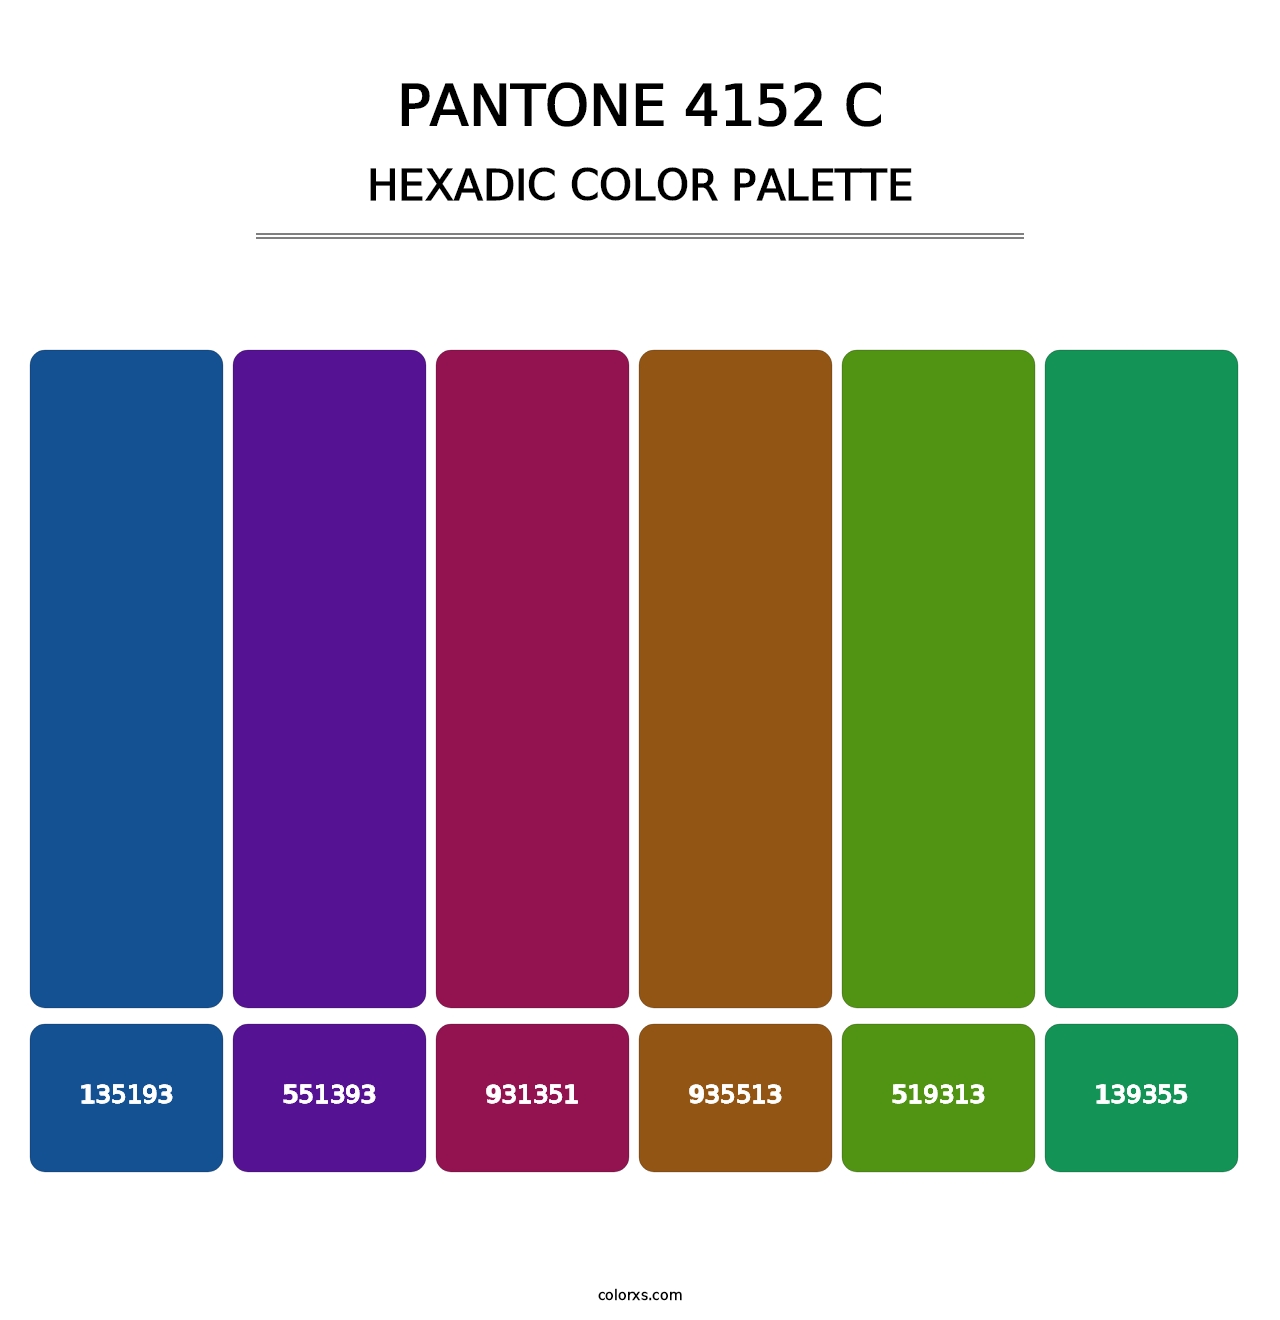 PANTONE 4152 C - Hexadic Color Palette